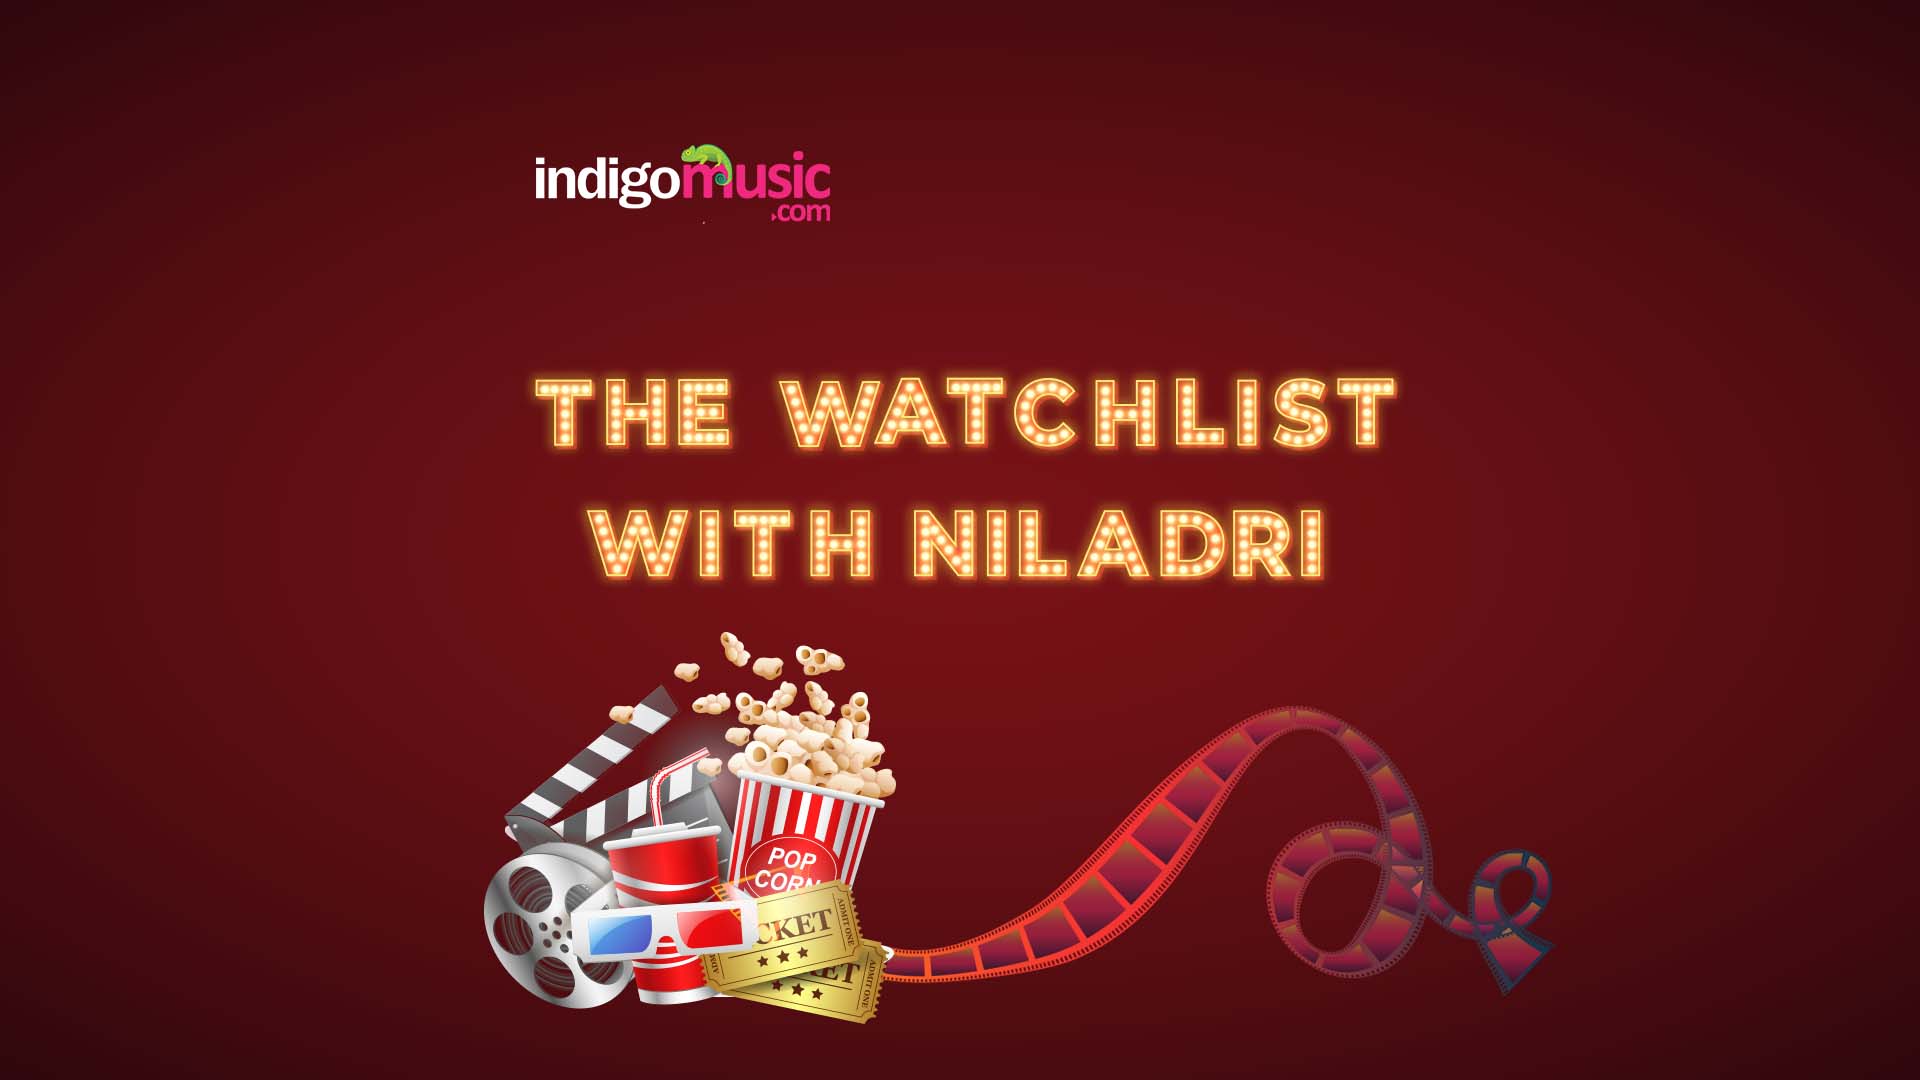 The Watch List with Niladri